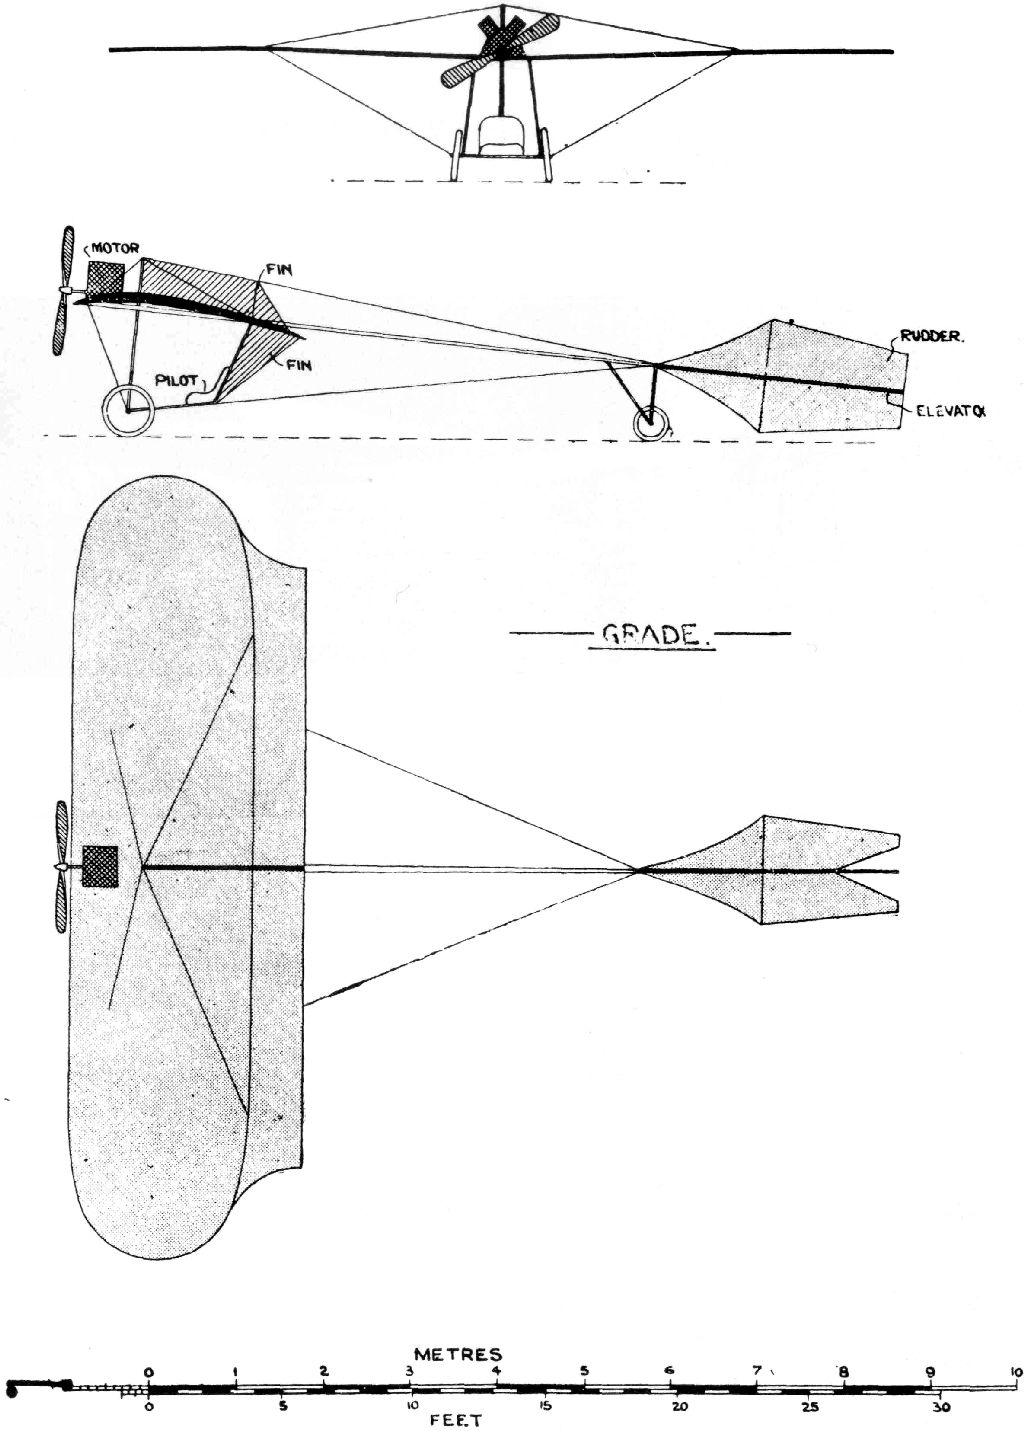 GRADE. Uniform Aeroplane Scale